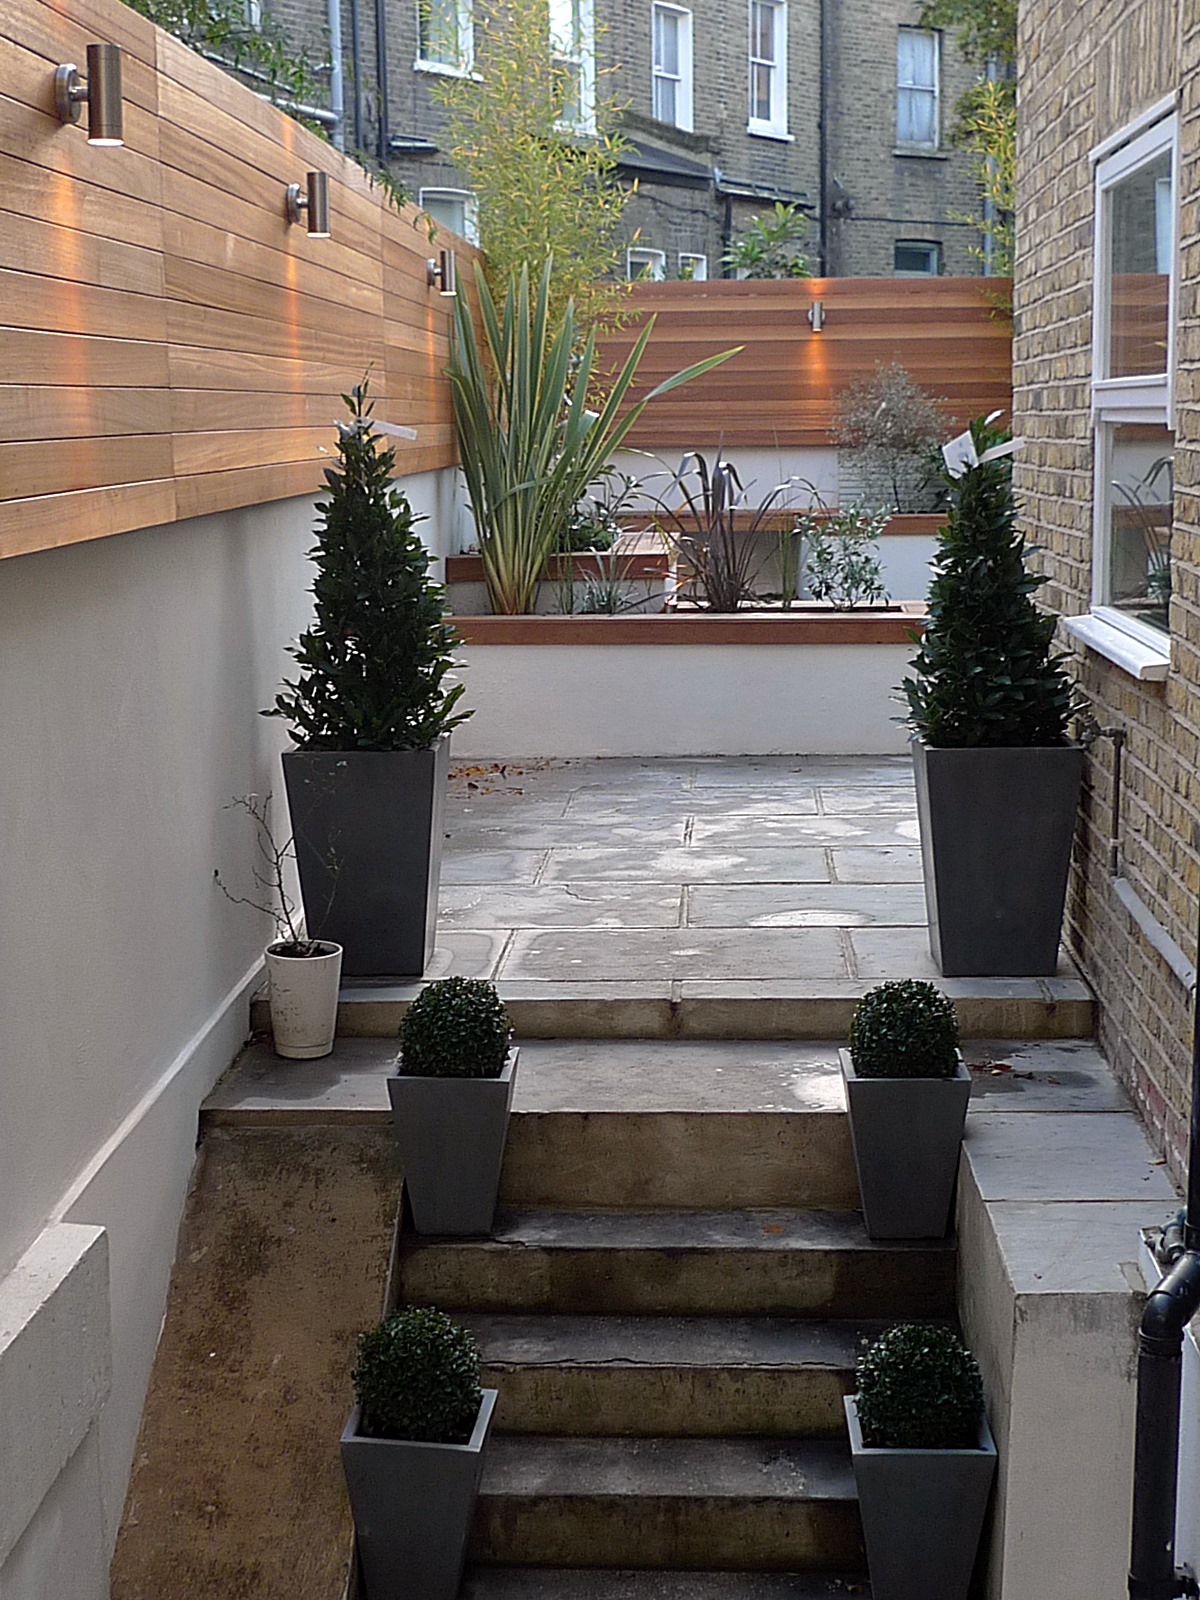 modern london courtyard low maintenance urban outdoor indoor living garden space paving screens planting bench raised beds (1)